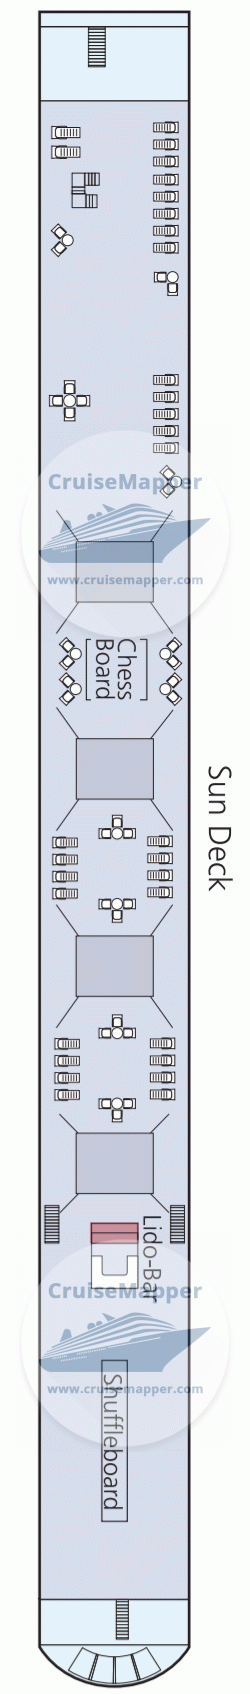 MS Amadeus Silver Deck 04 - Sundeck